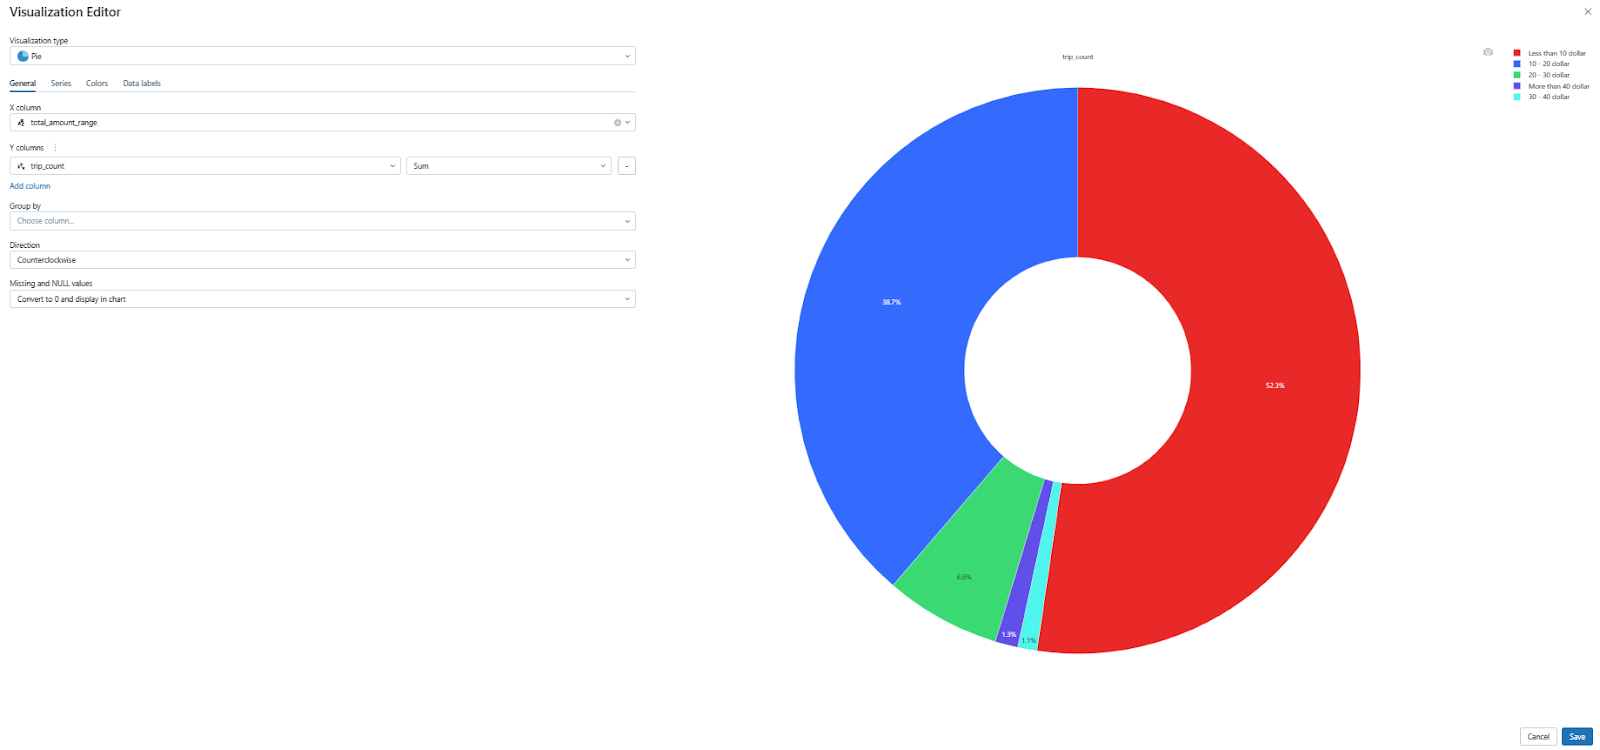 Visualizing the data in Pie chart format - Databricks Dashboards